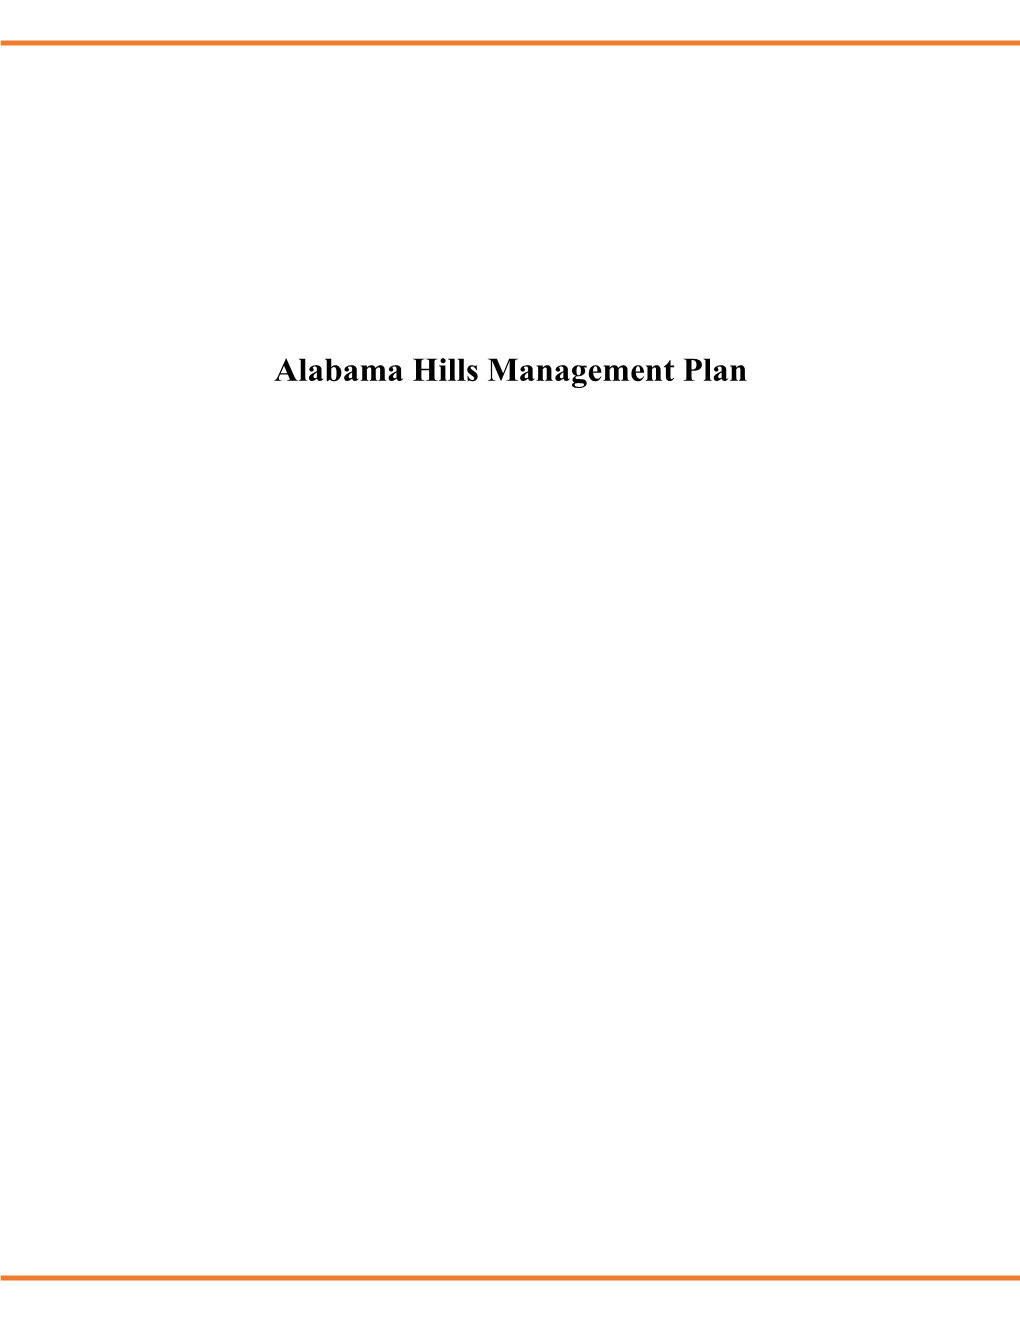 Alabama Hills Management Plan